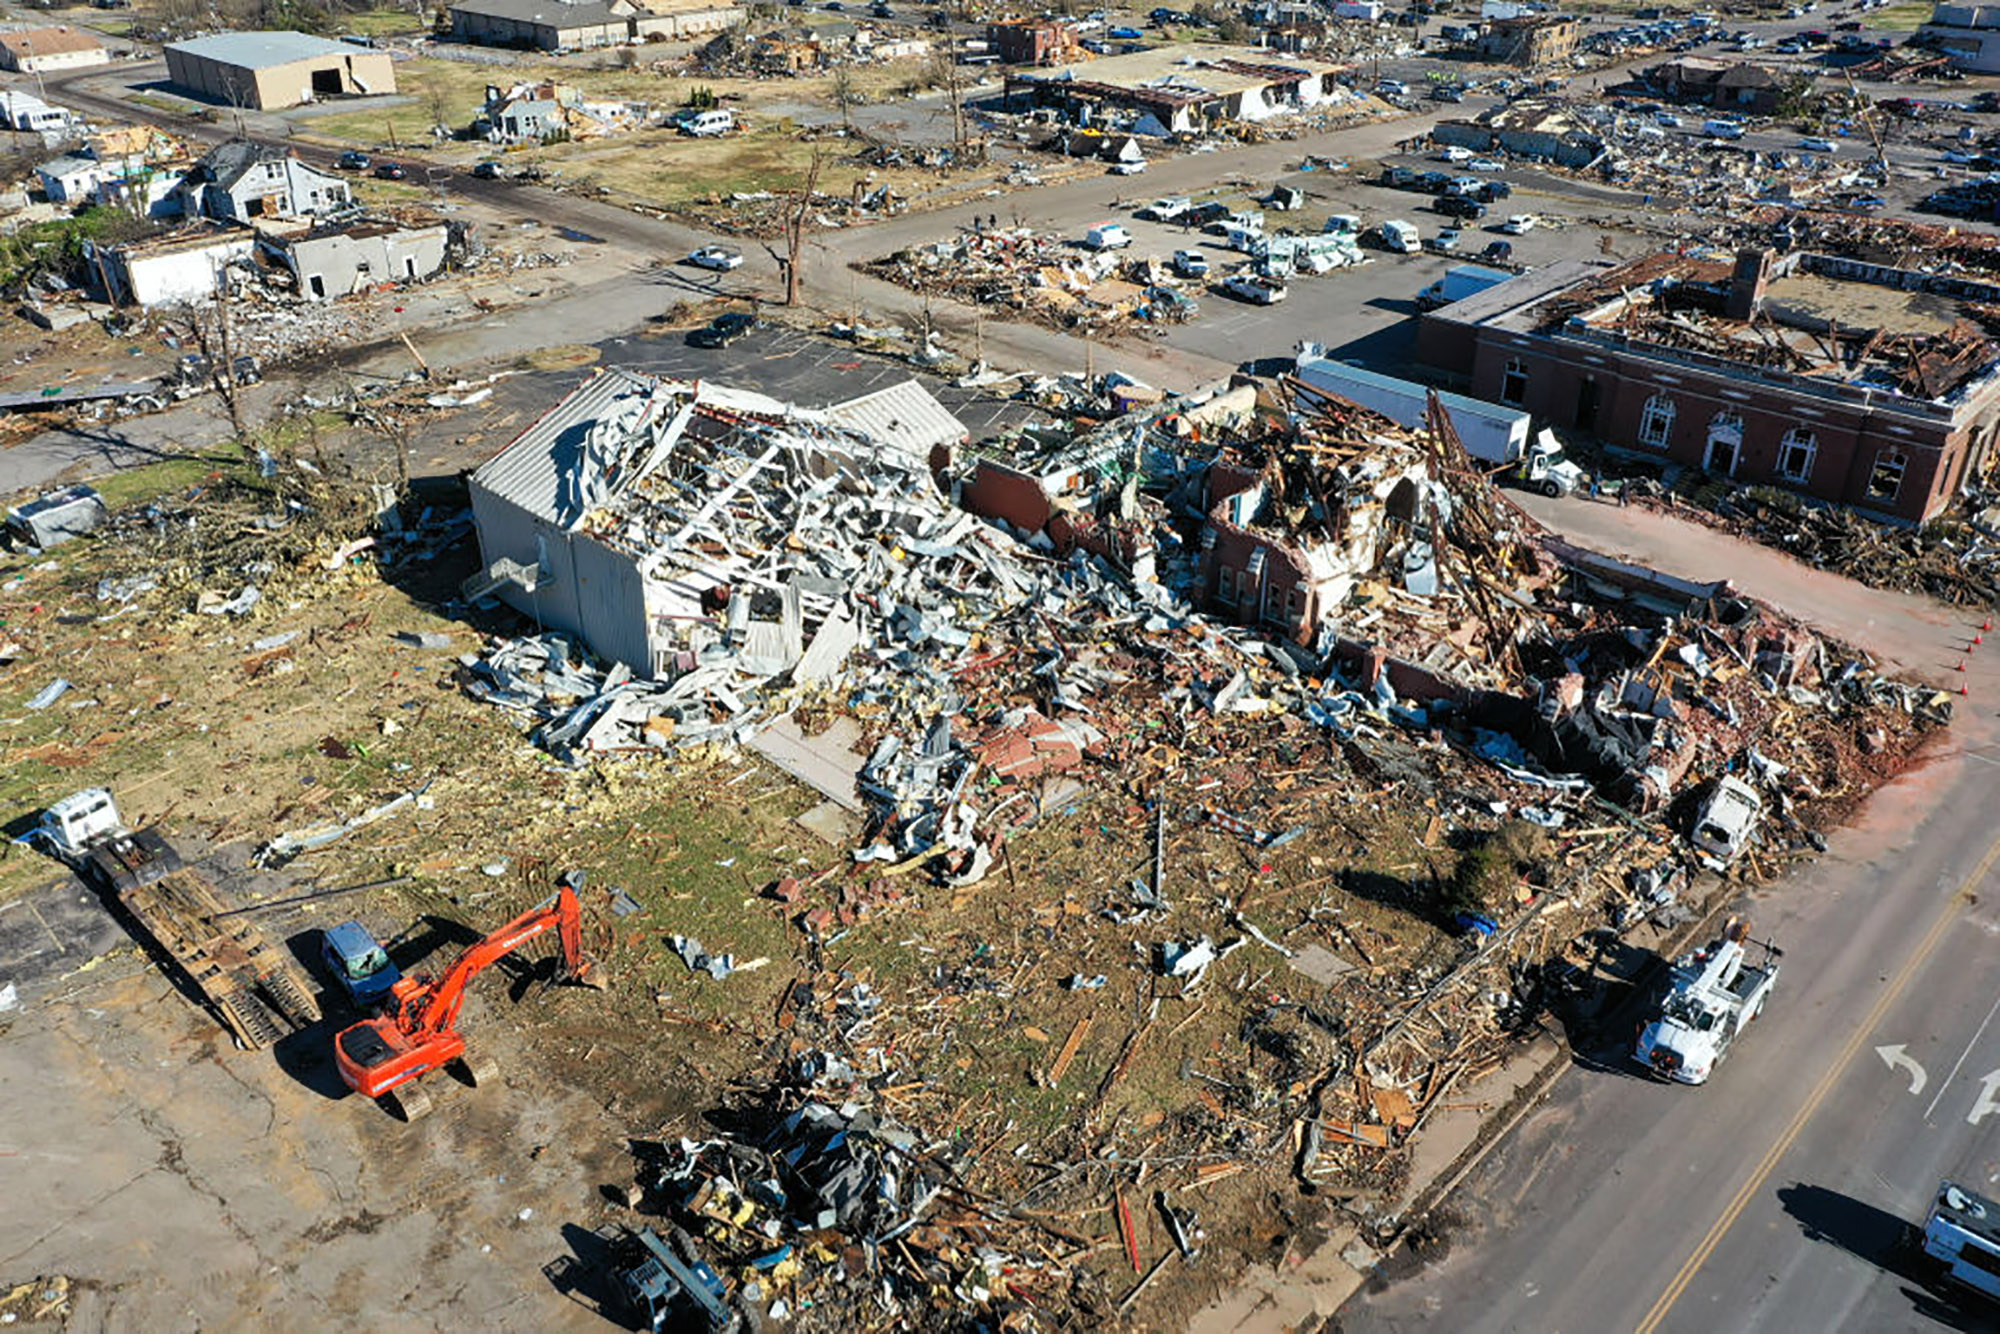 Kentucky tornado storm shelter business can't keep up with demand